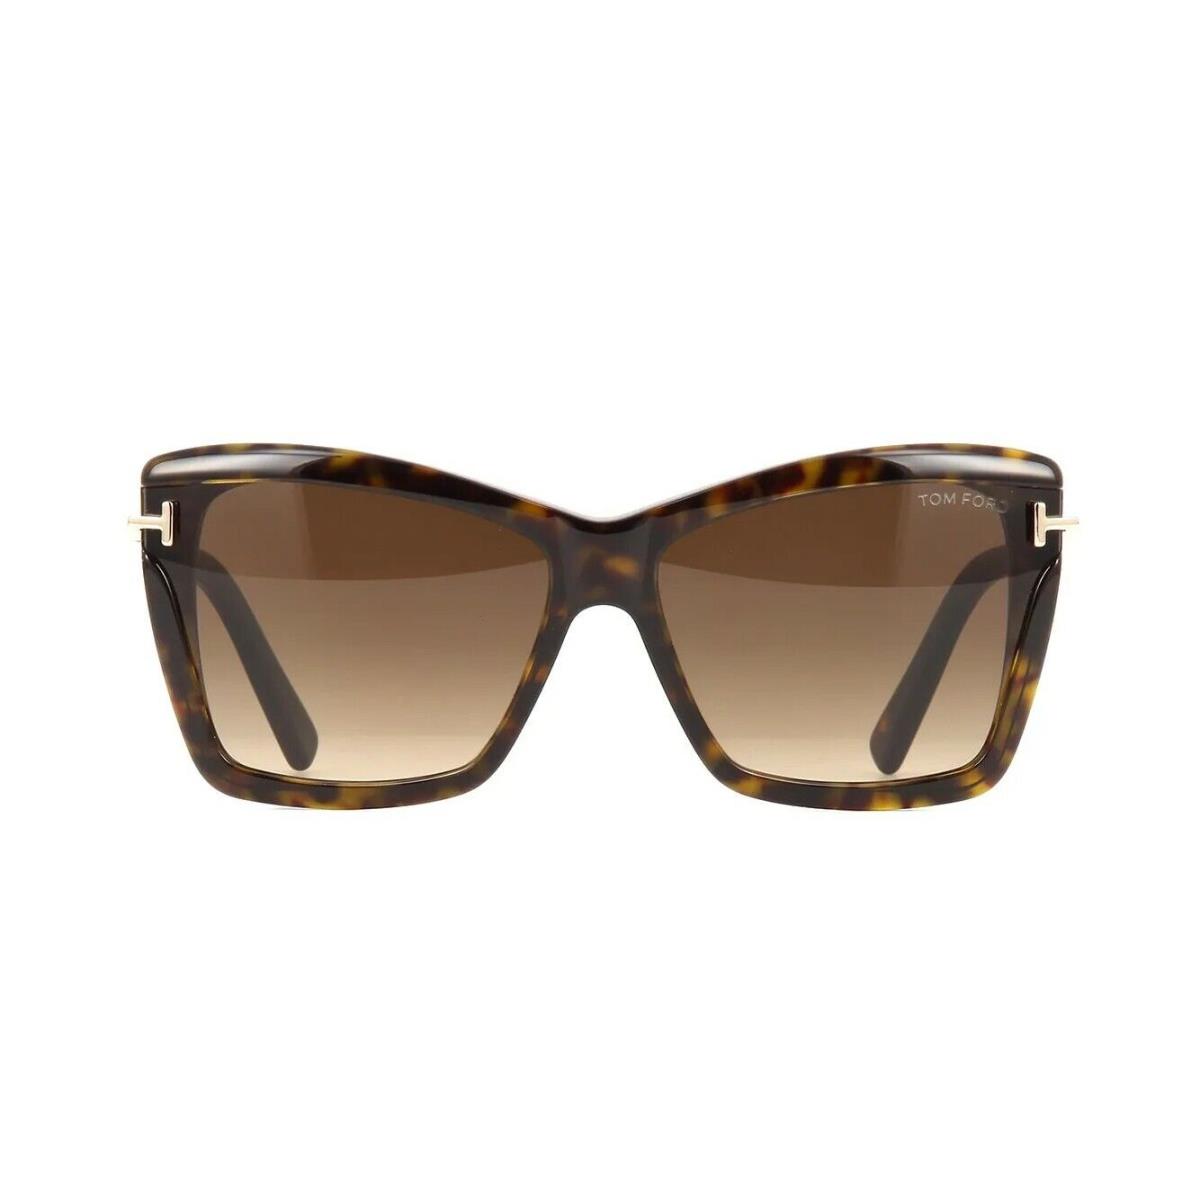 Tom Ford Leah FT 0849 Dark Havana/brown Shaded 52F Sunglasses - Frame: Dark Havana, Lens: Brown Shaded